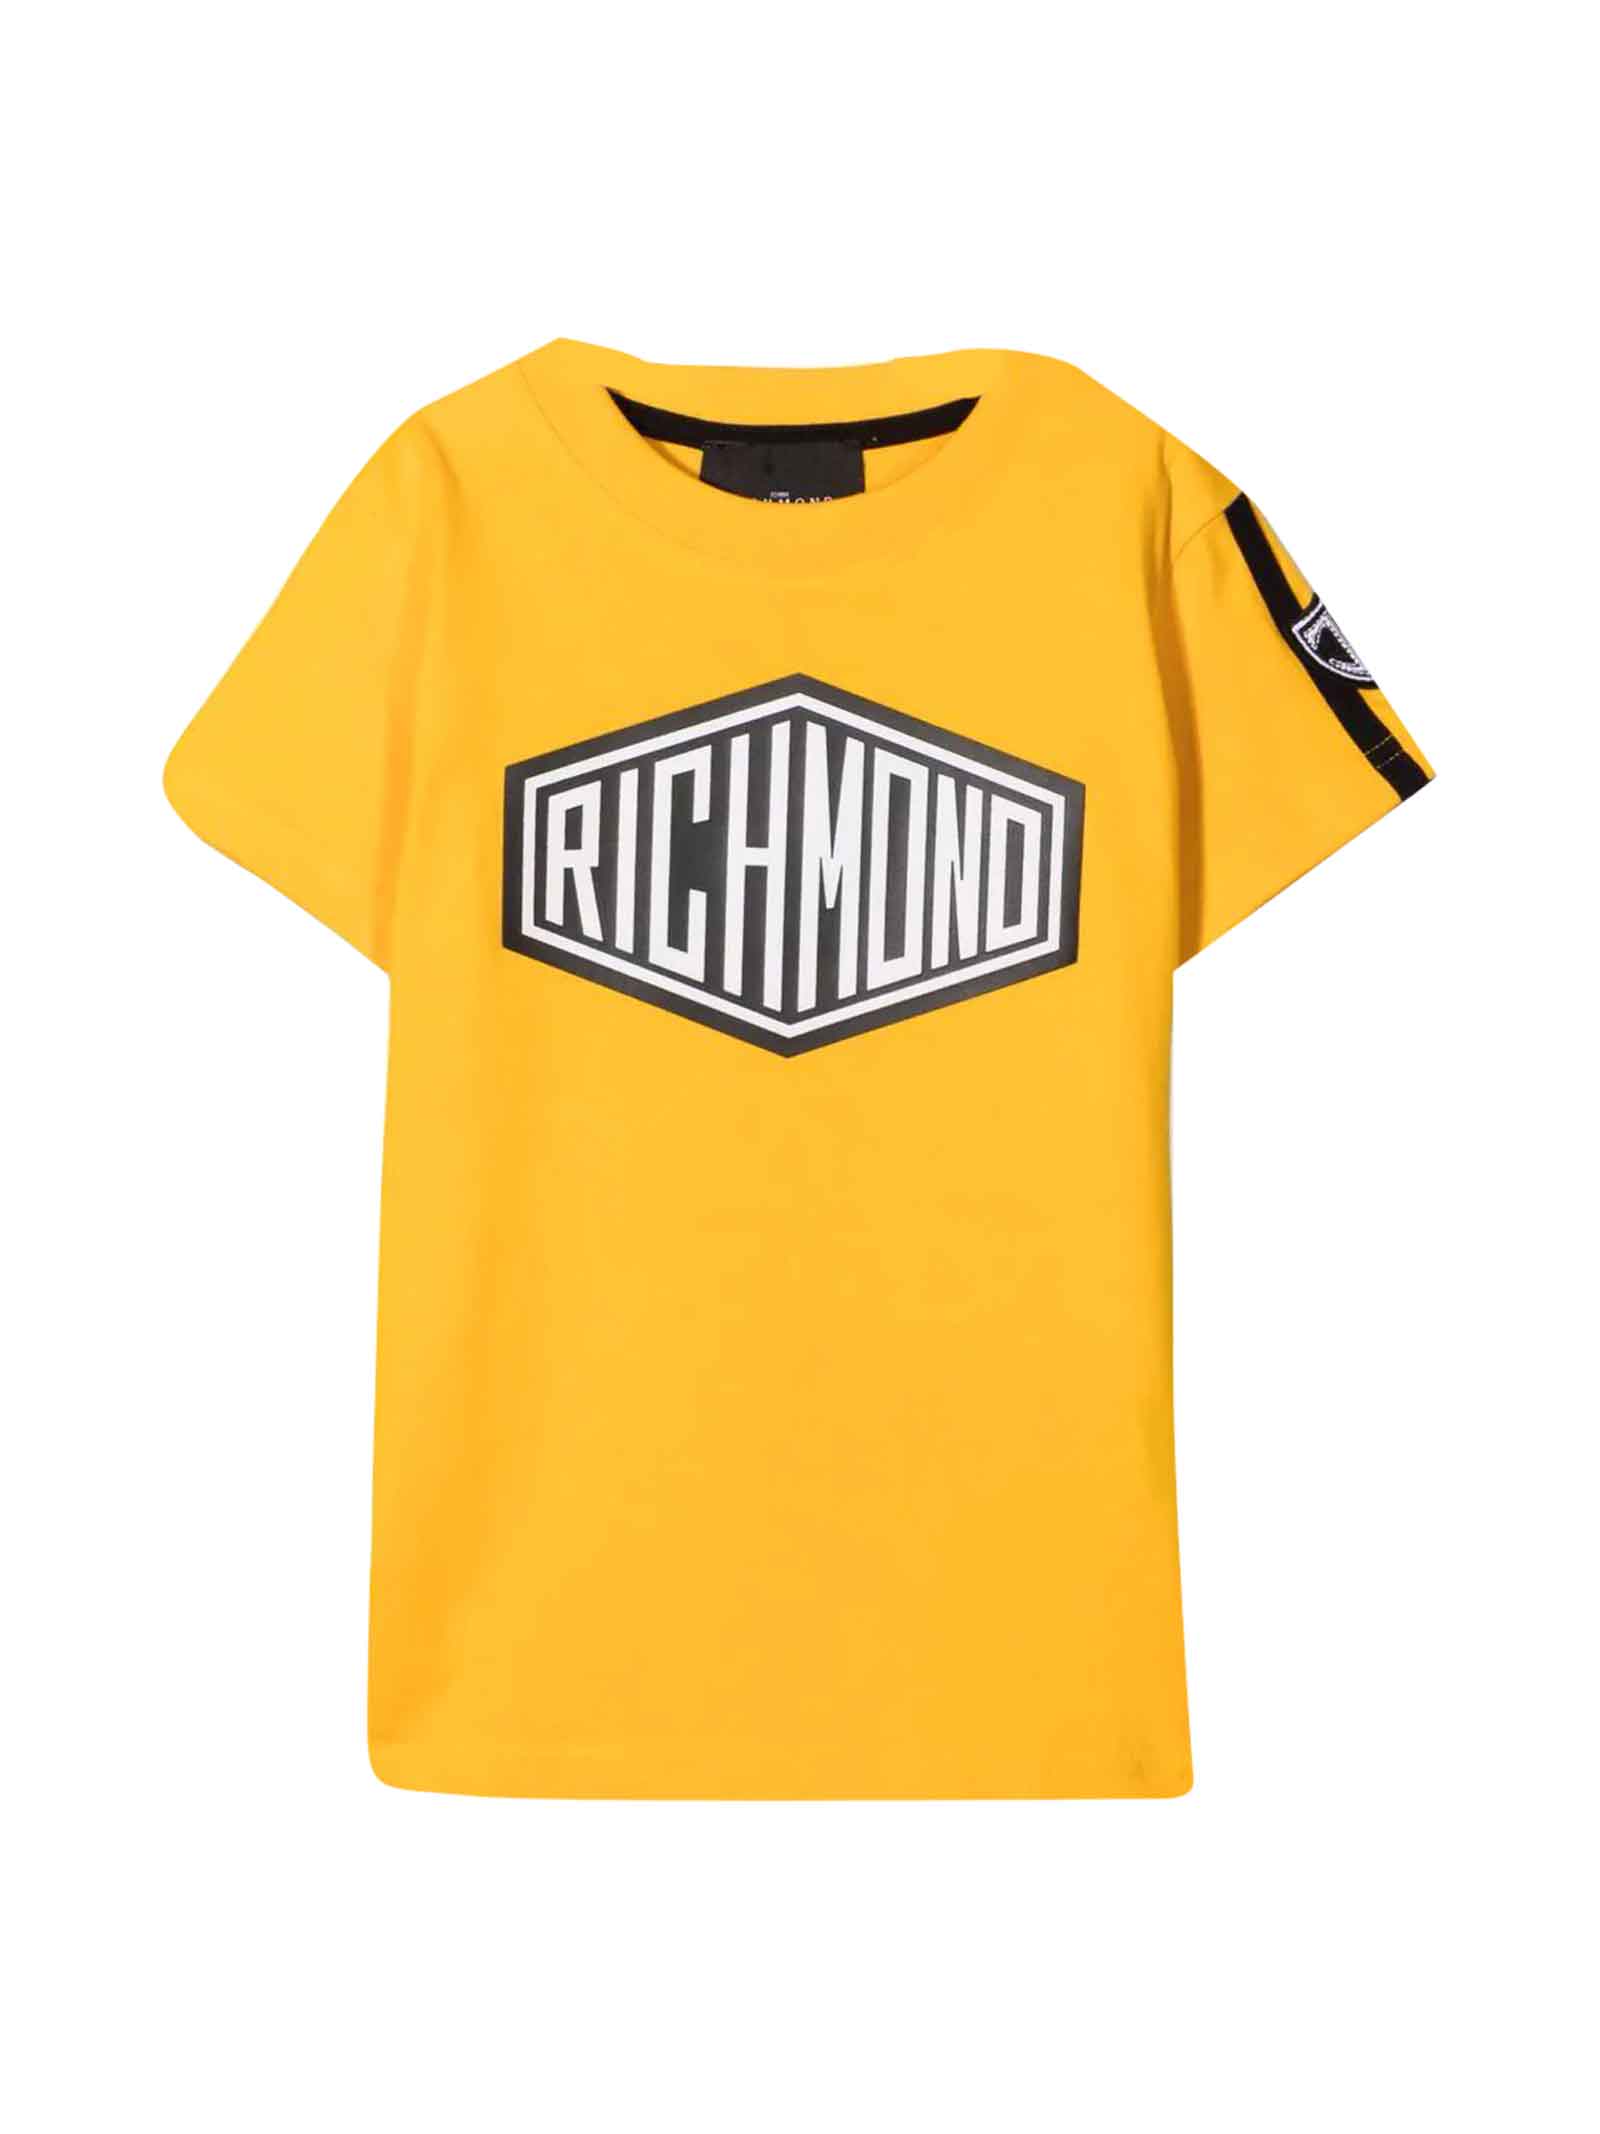 John Richmond Yellow T-shirt With Print